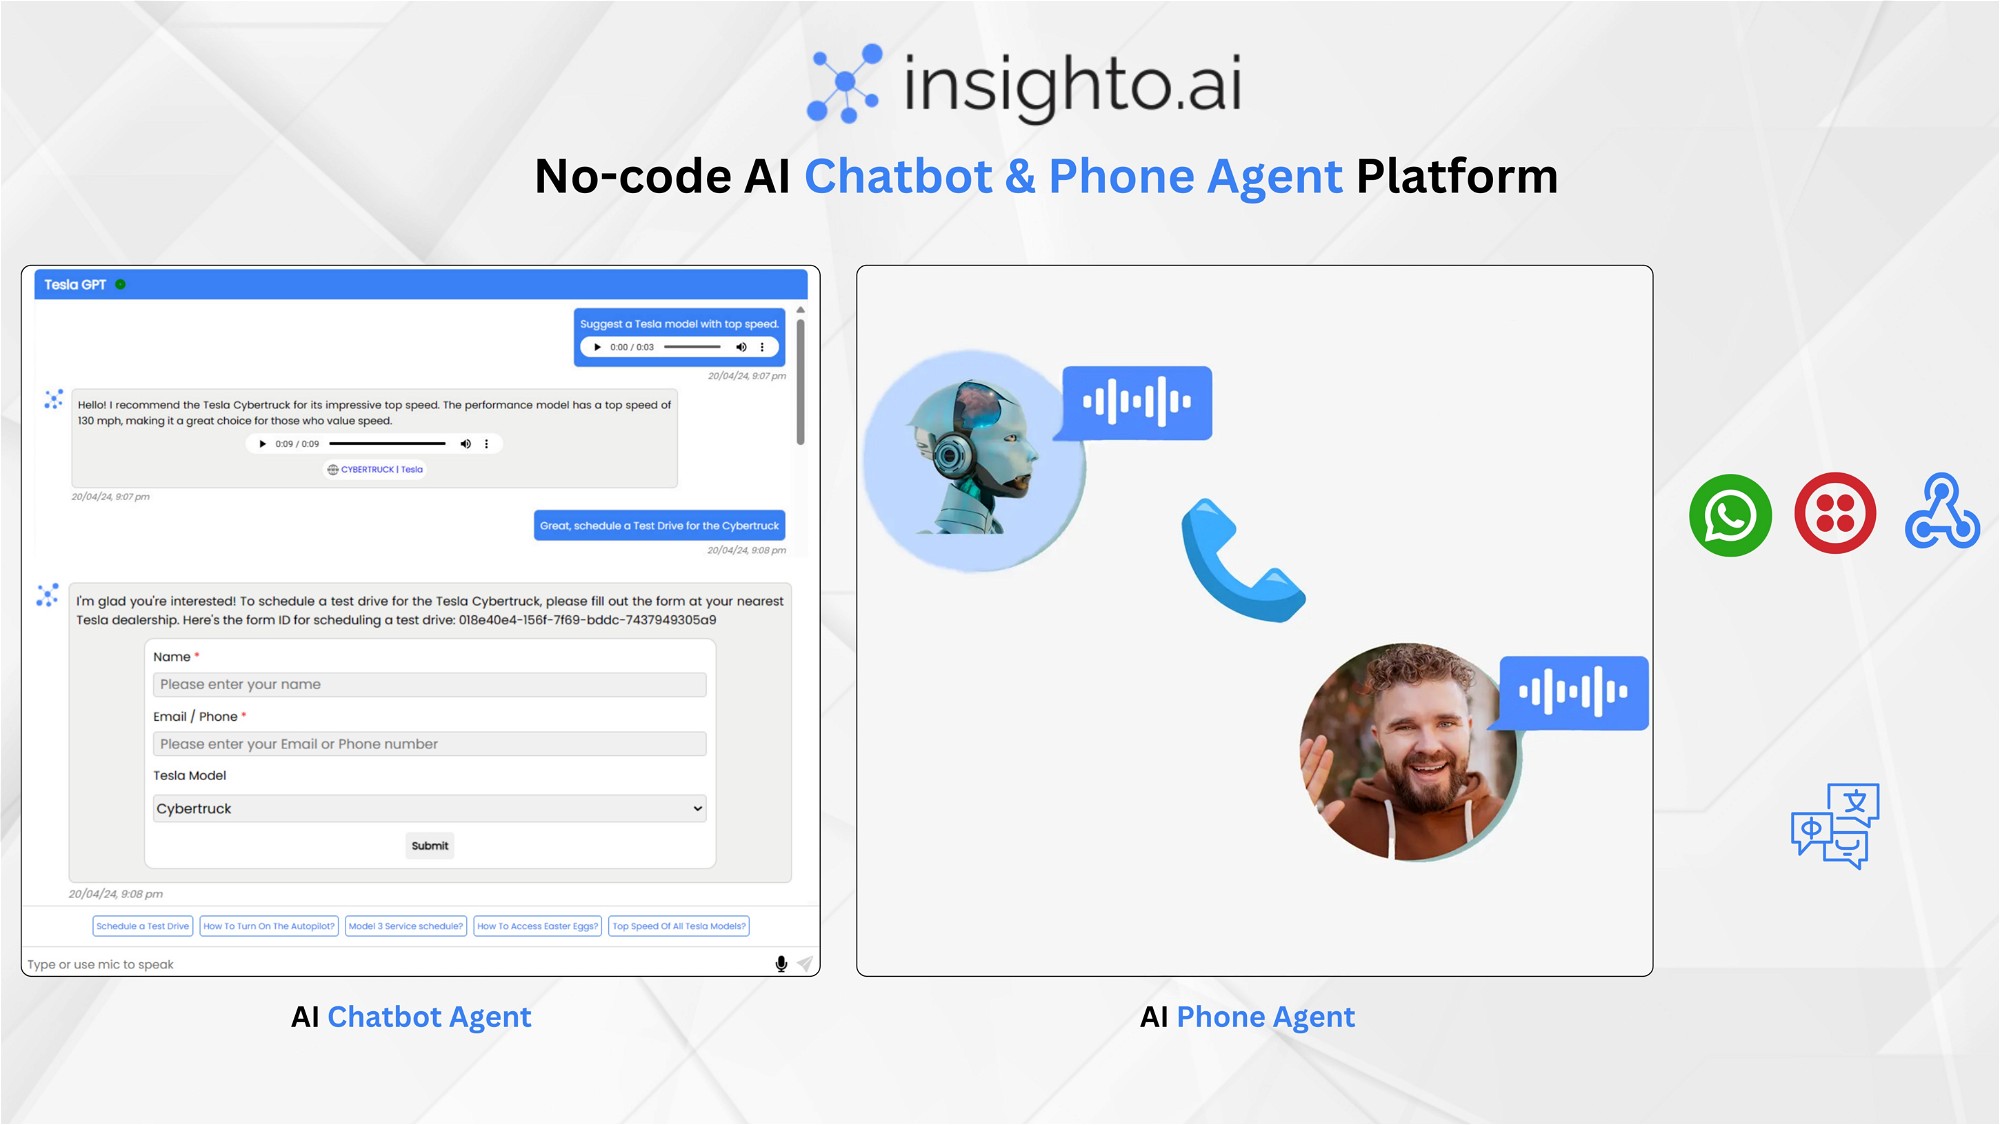 Insighto.ai – No-code Platform for AI Chatbot & Phone Agents – LIFETIME Deals by appsumo